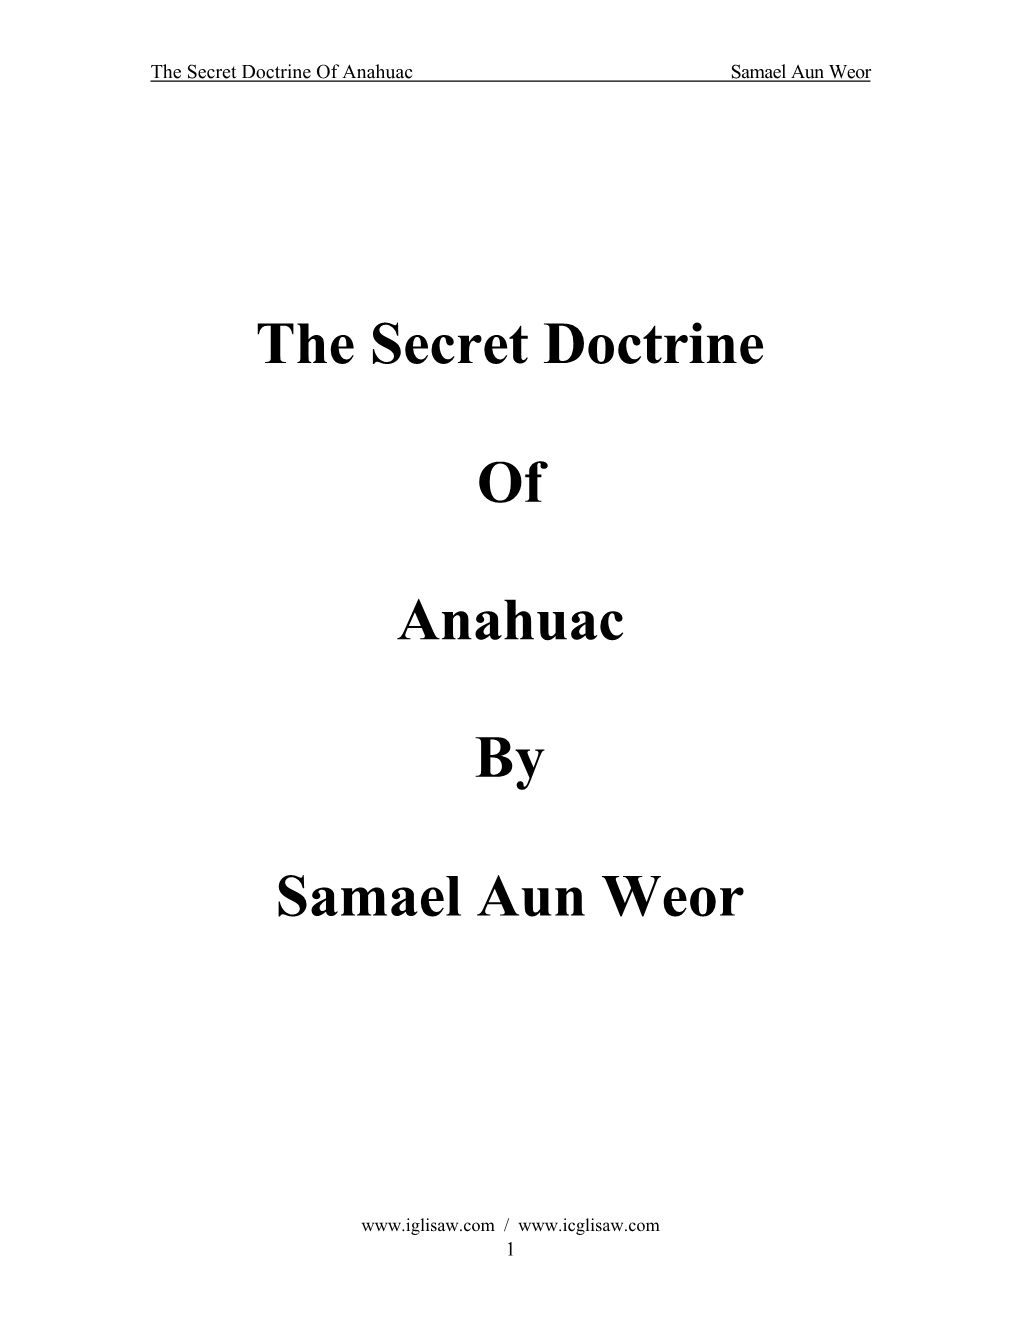 The Secret Doctrine of Anahuac by Samael Aun Weor